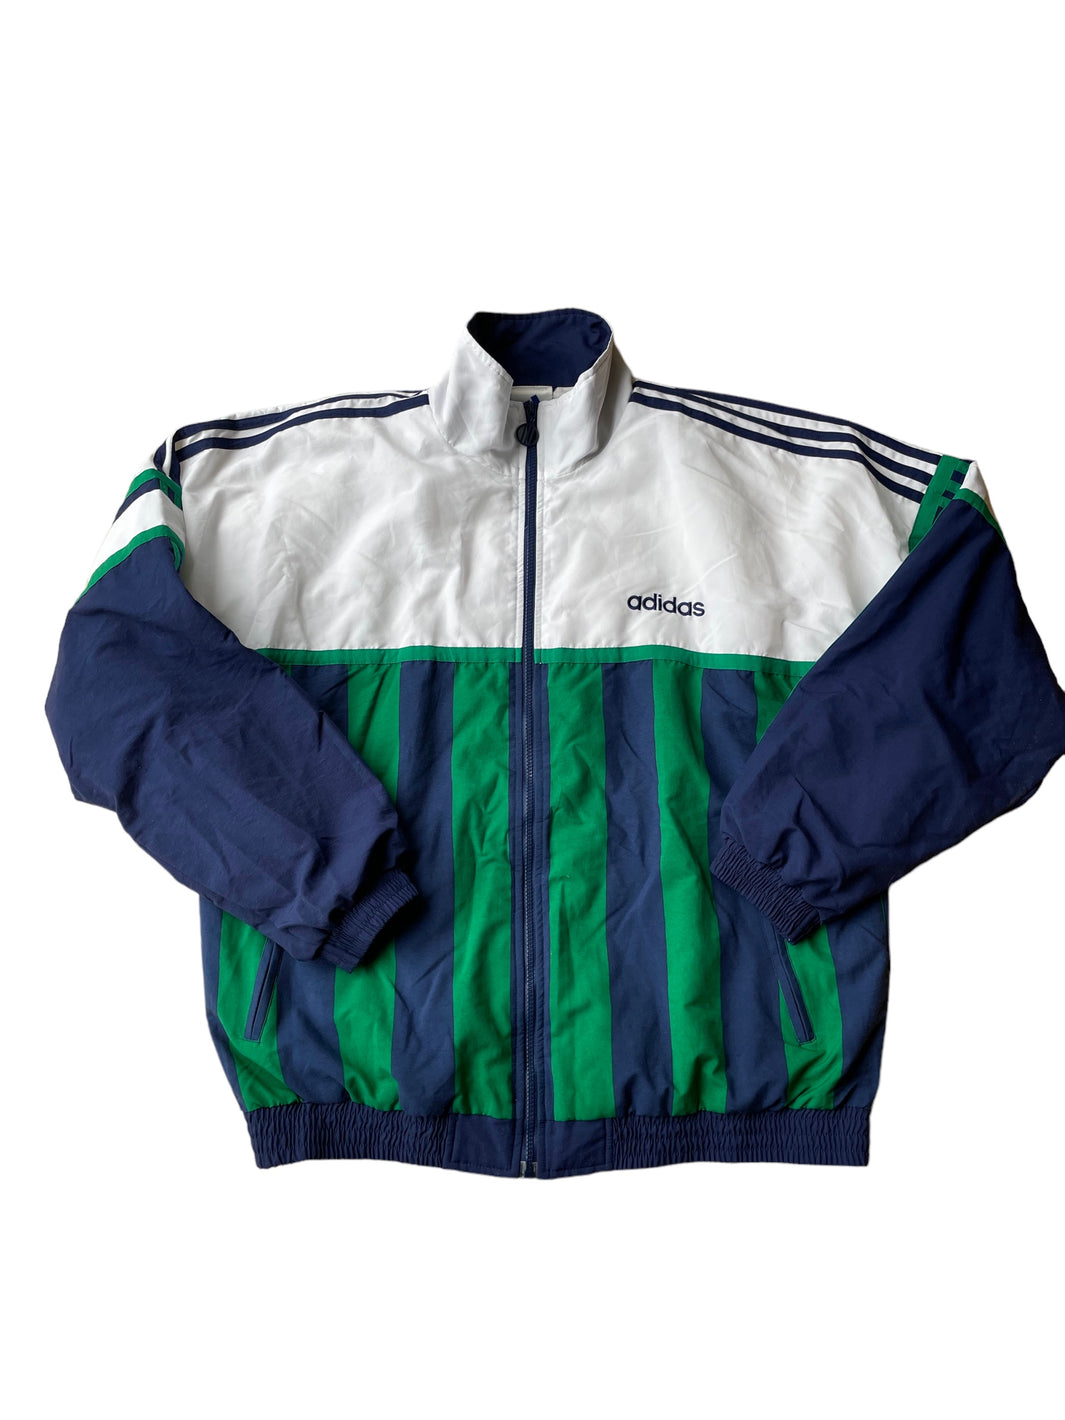 90s vintage track  jacket